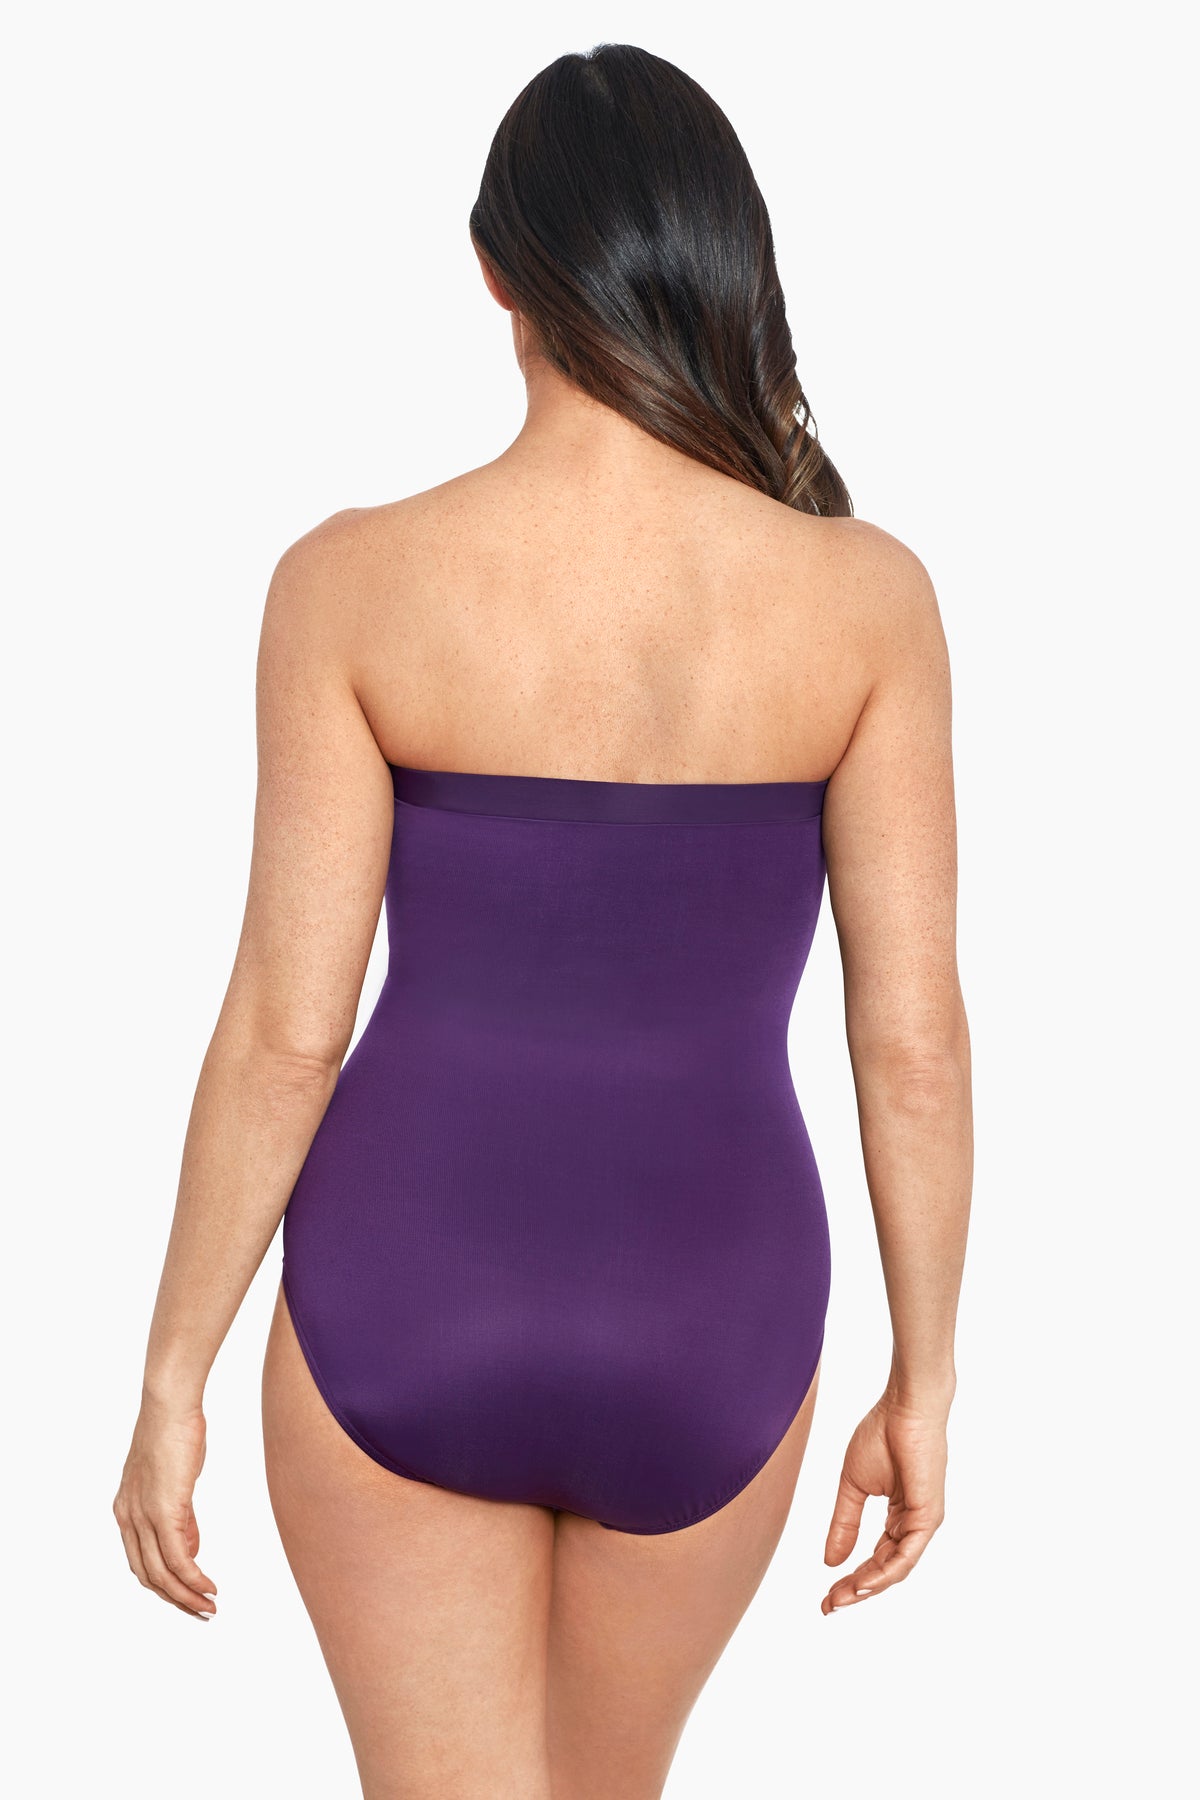 Womens Tummy Control Swimsuit - Miraclesuit Avanti Bandeau